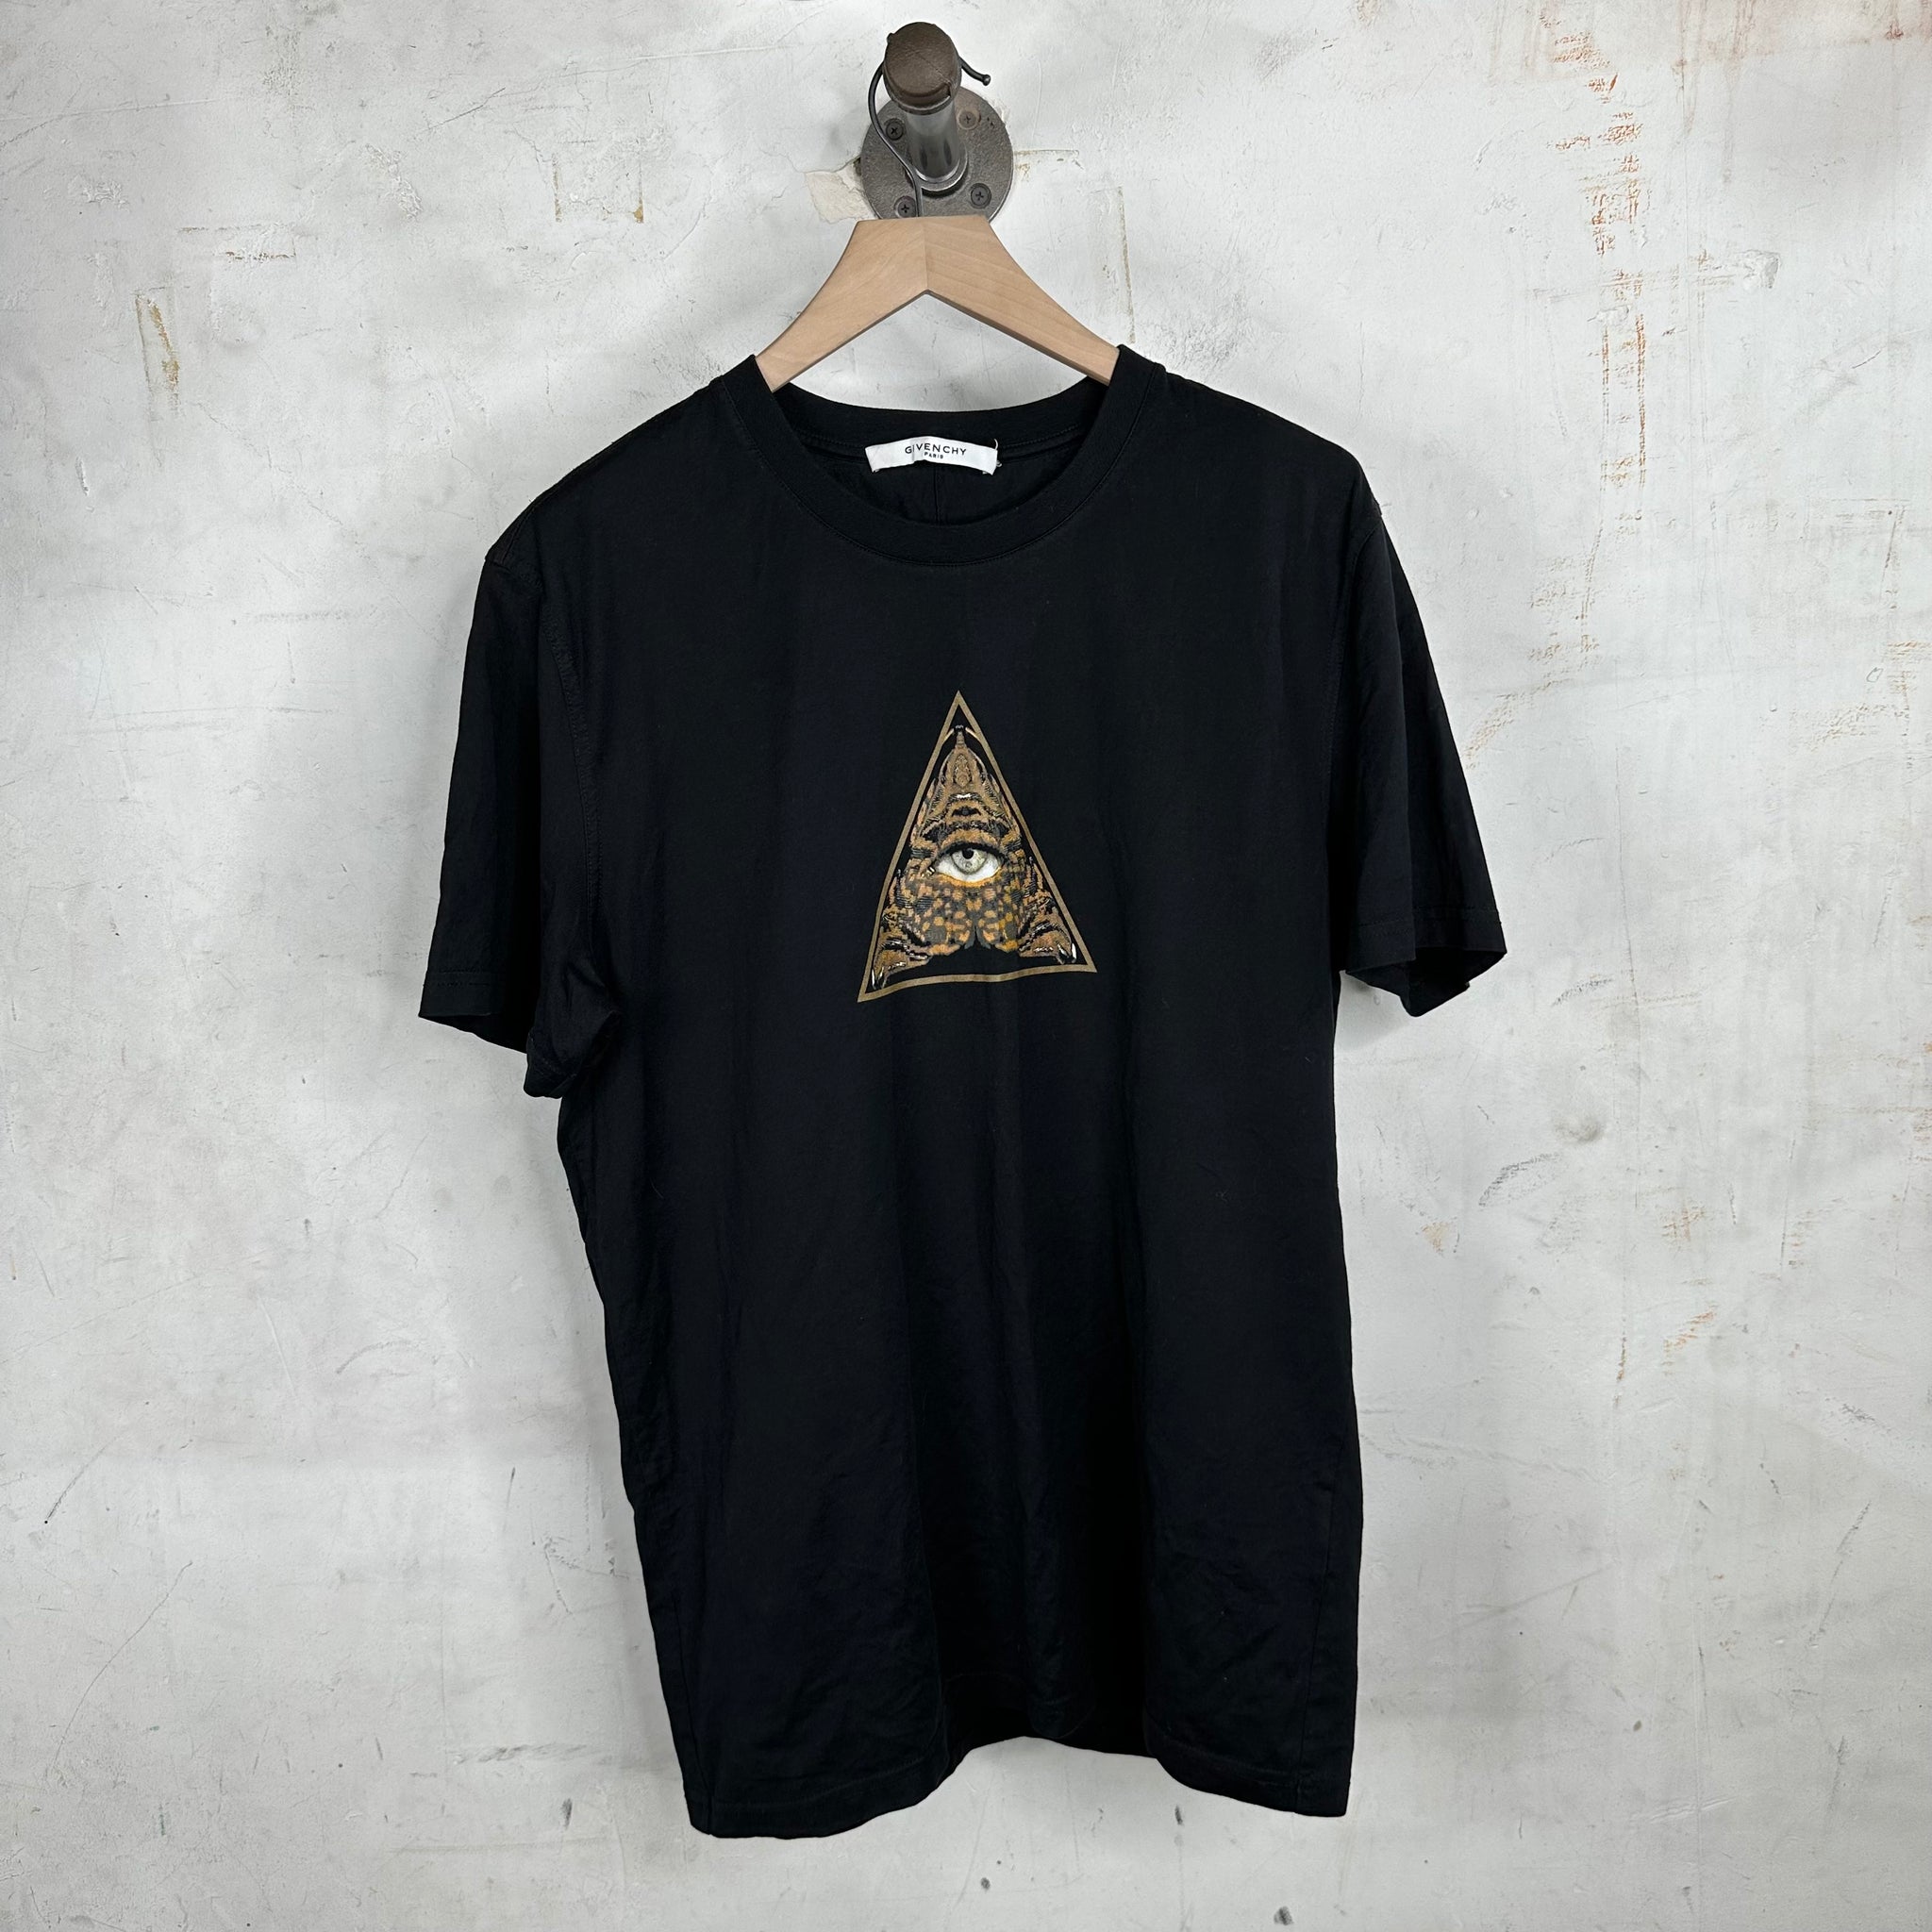 Givenchy Illuminati T-Shirt